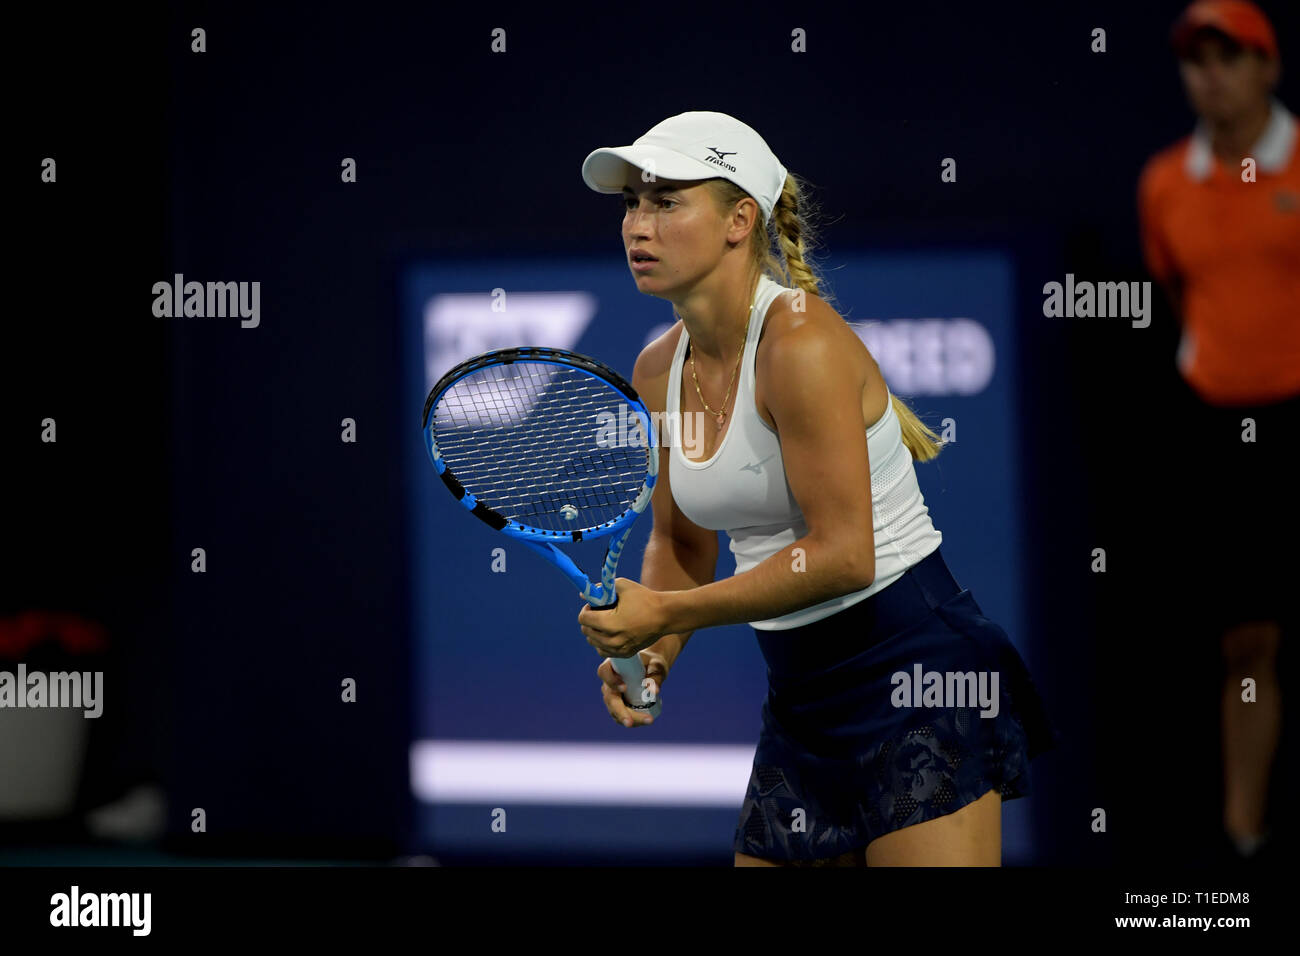 Yulia putintseva hard court tennis hi-res stock photography and images -  Alamy